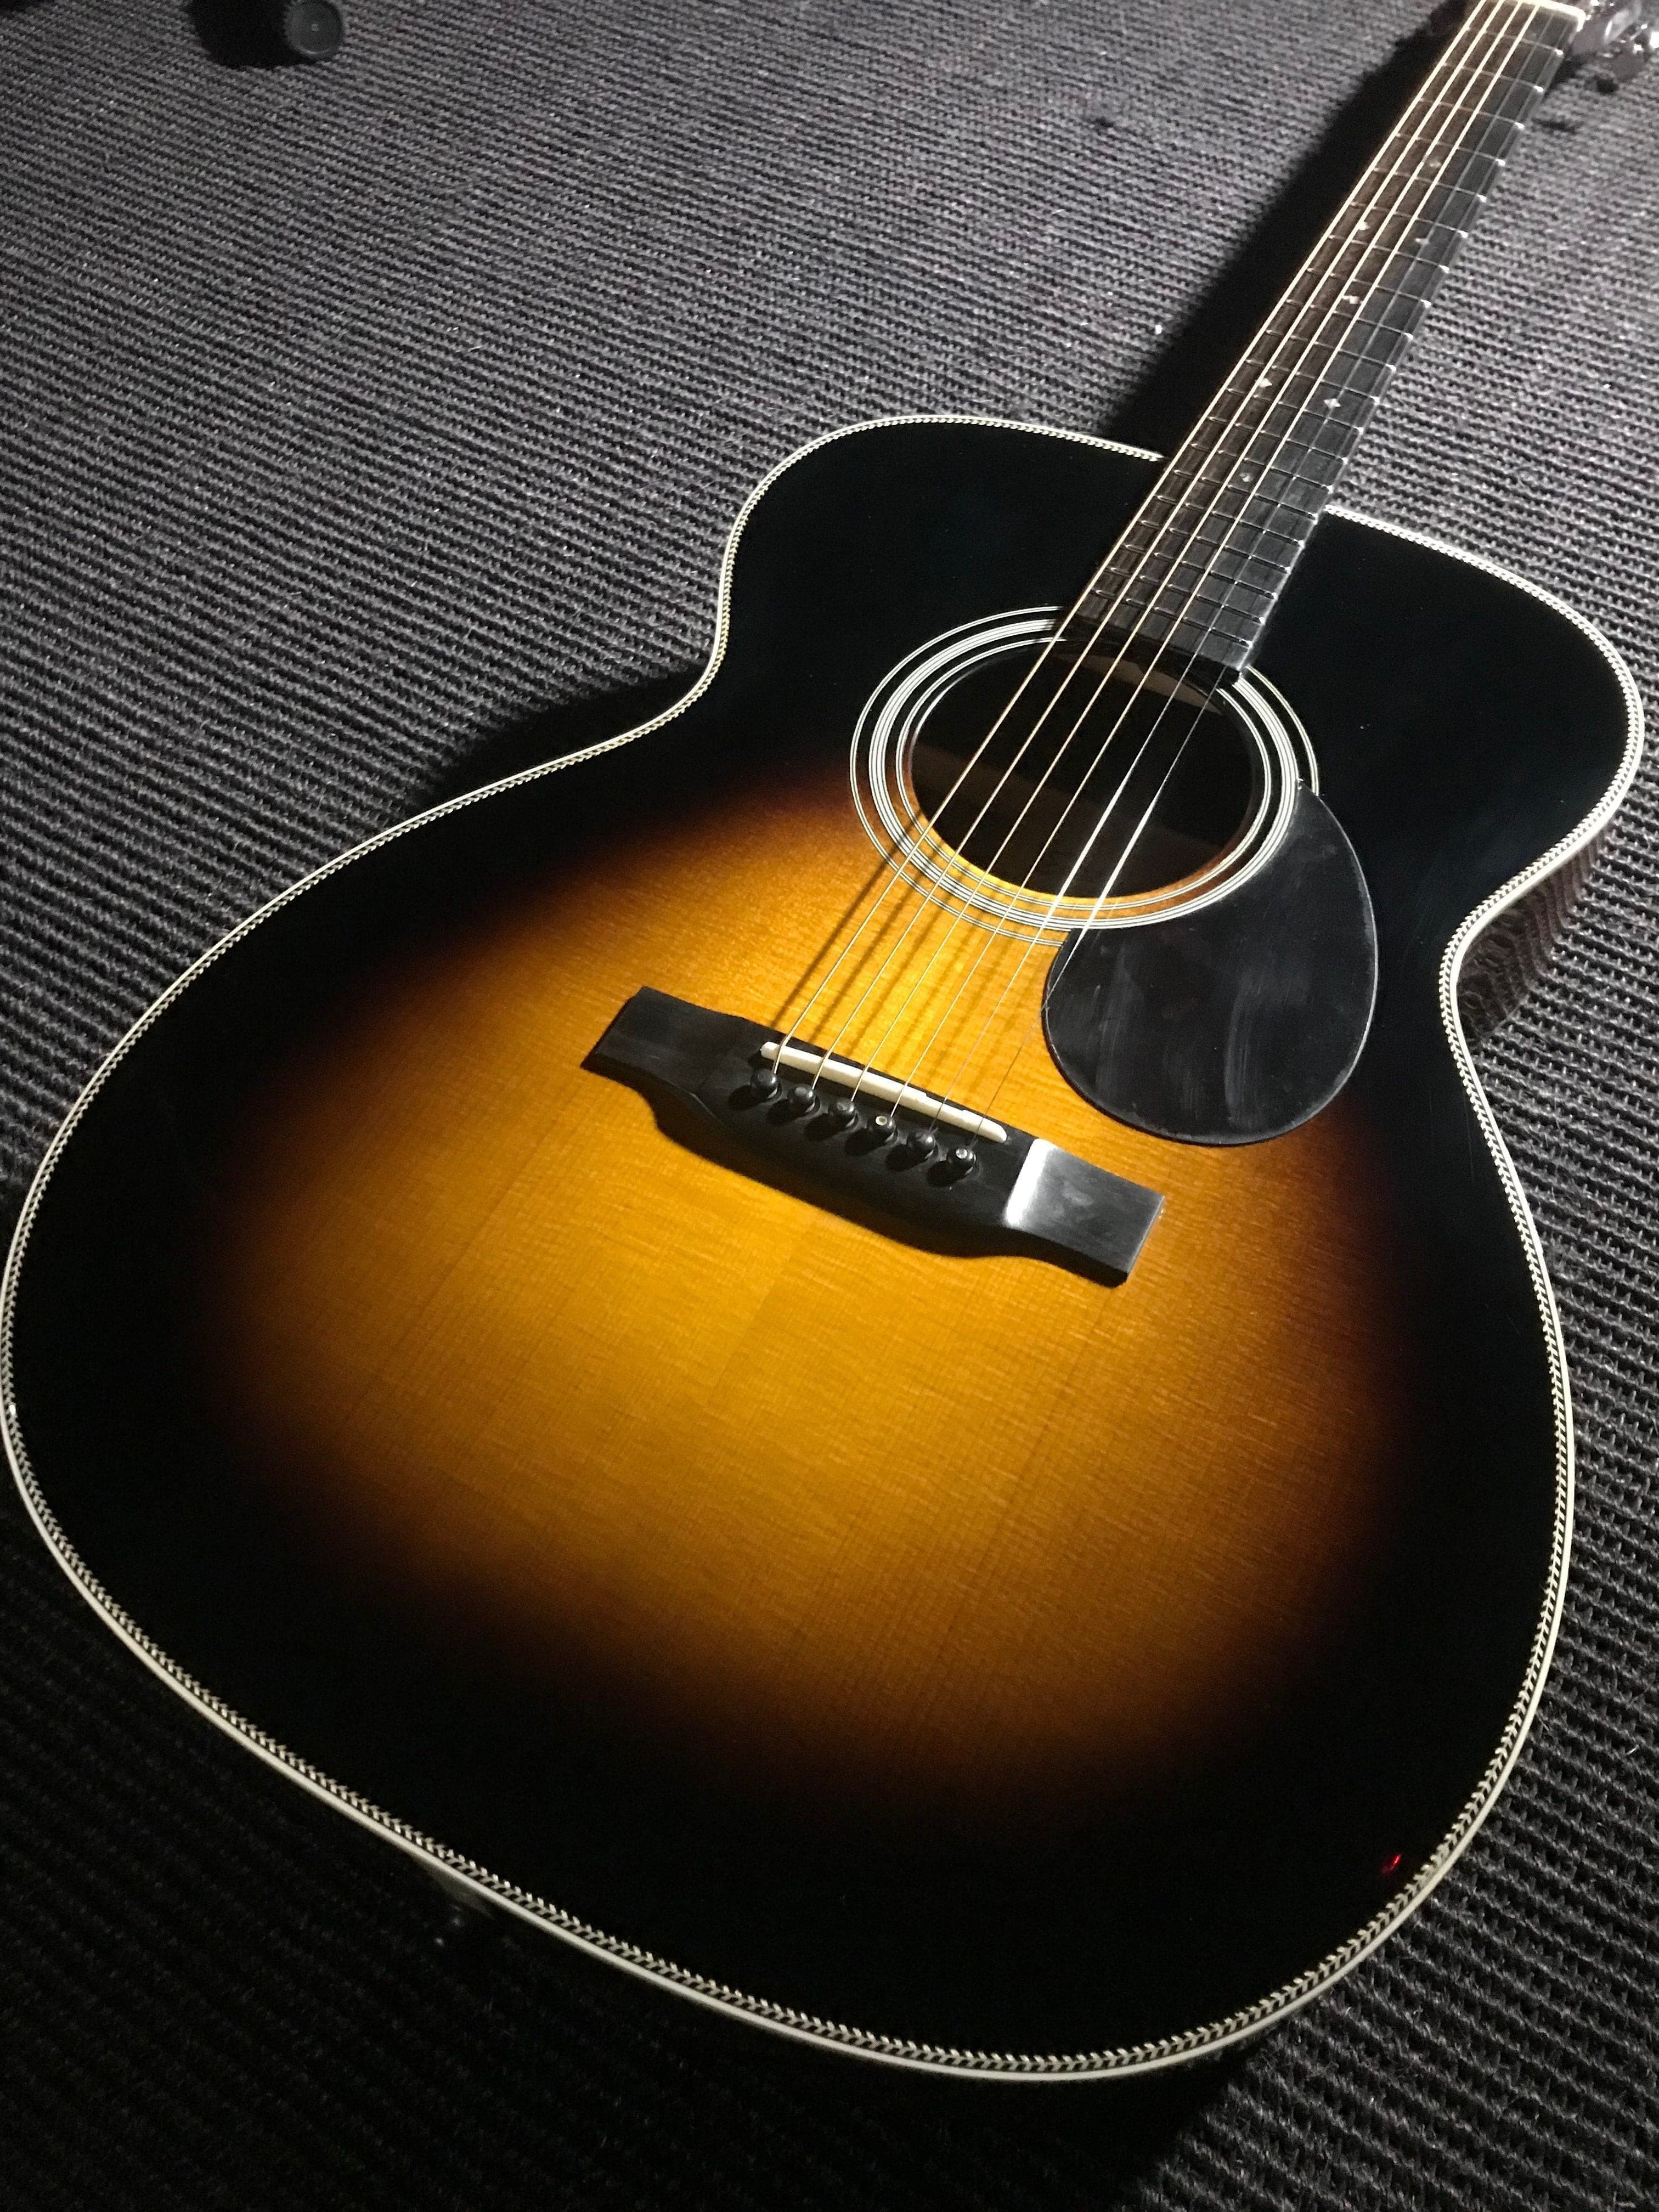 Eastman E20 OM SB Orchestra model, Acoustic Guitar for sale at Richards Guitars.